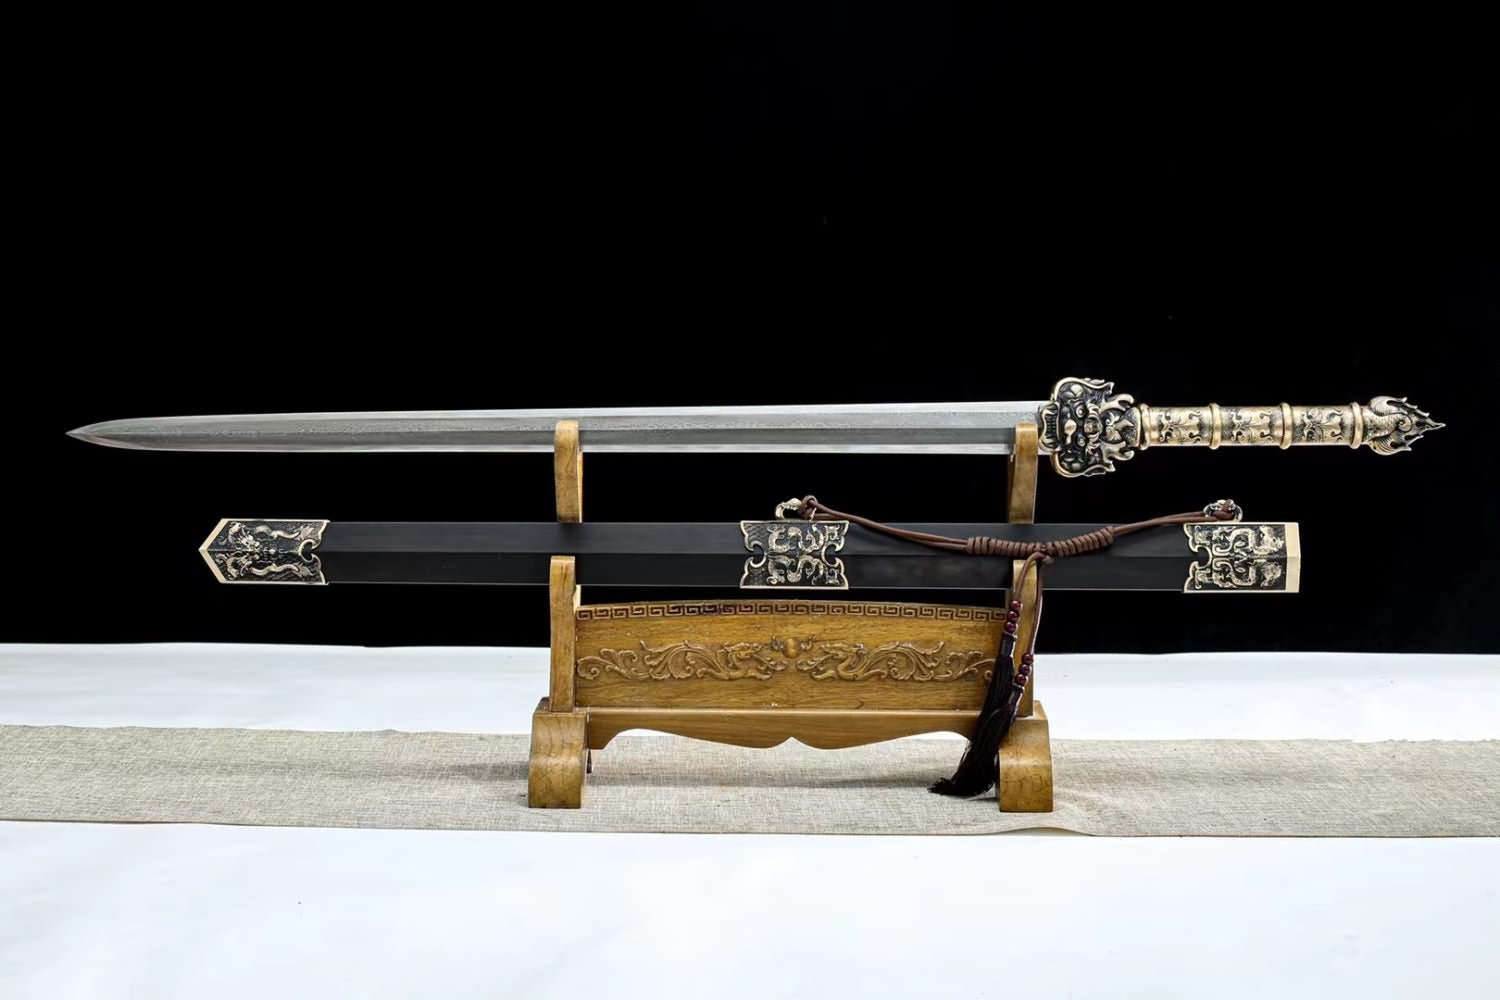 Han Sword, Damascus Steel Blade, Ebony Scabbard, Brass Dragon Fittings-Length 45”